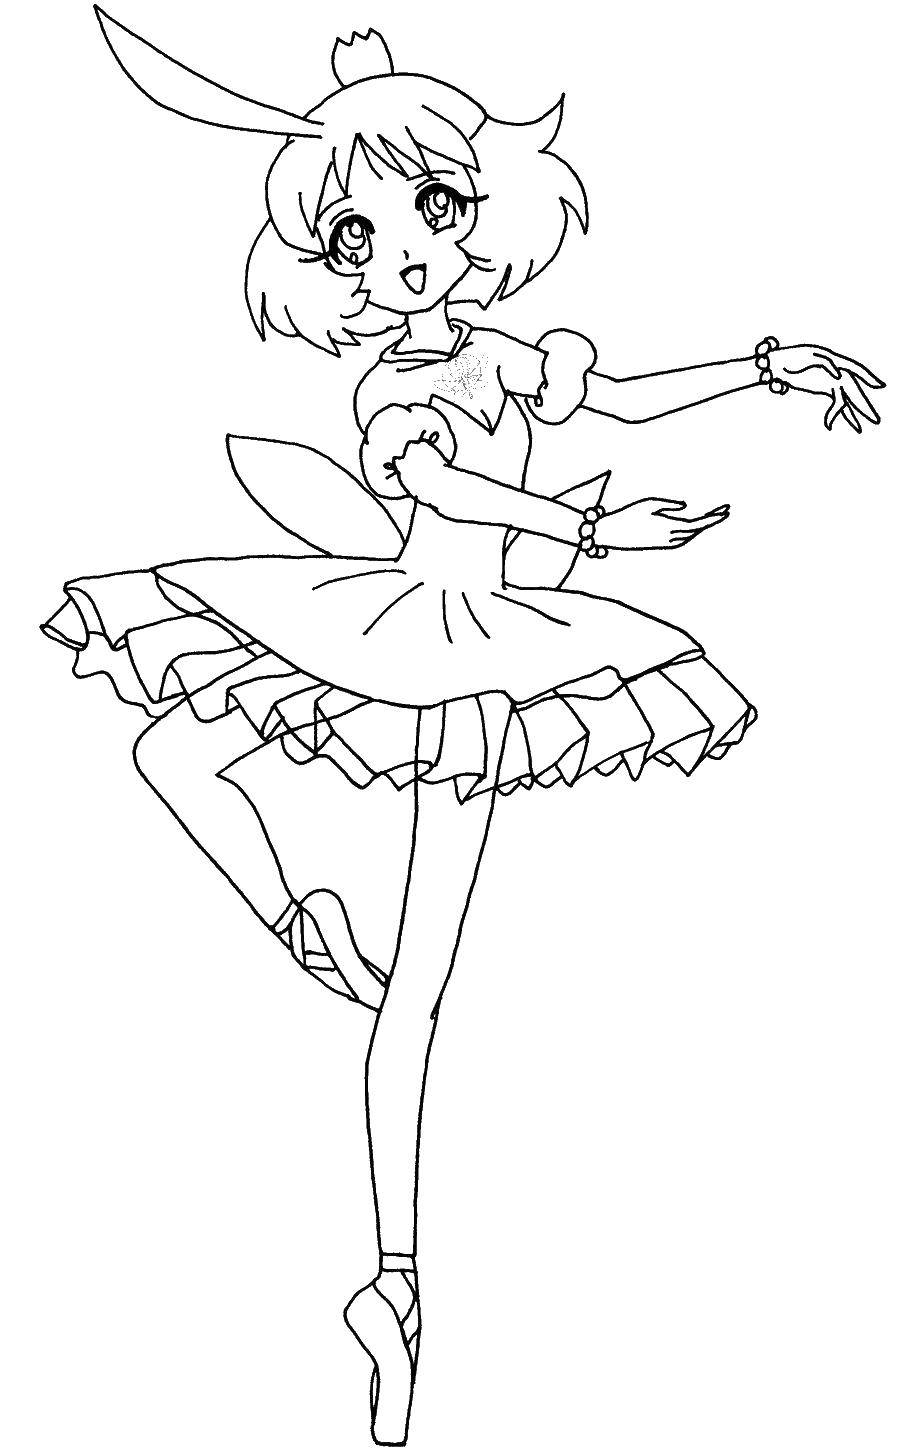 Coloring Ballerina anime. Category anime. Tags:  anime, ballerina.